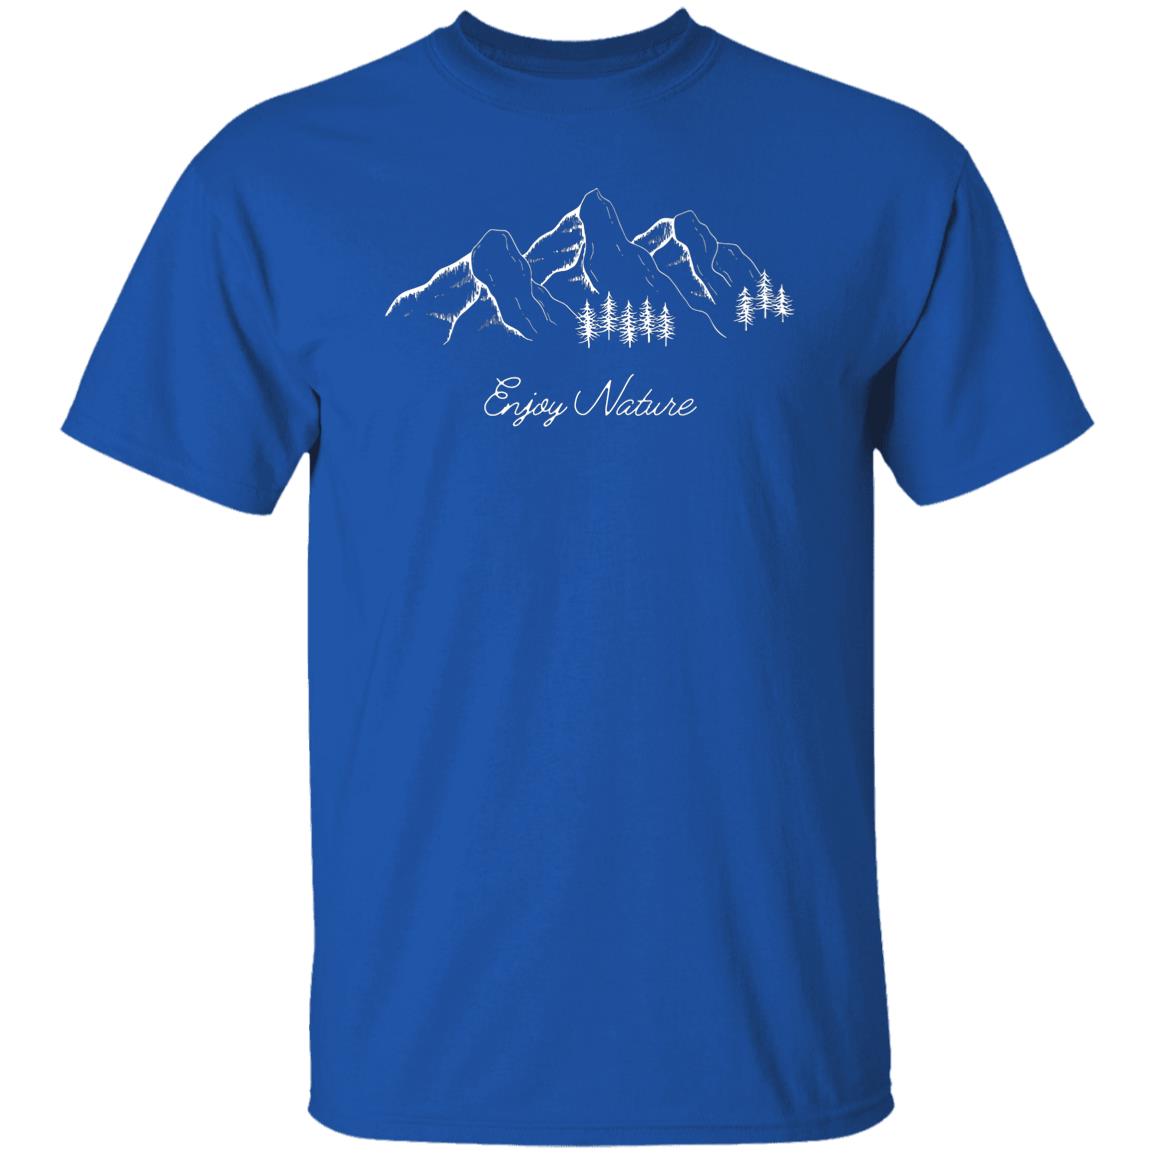 Enjoy Nature T-Shirt | Gift For Him